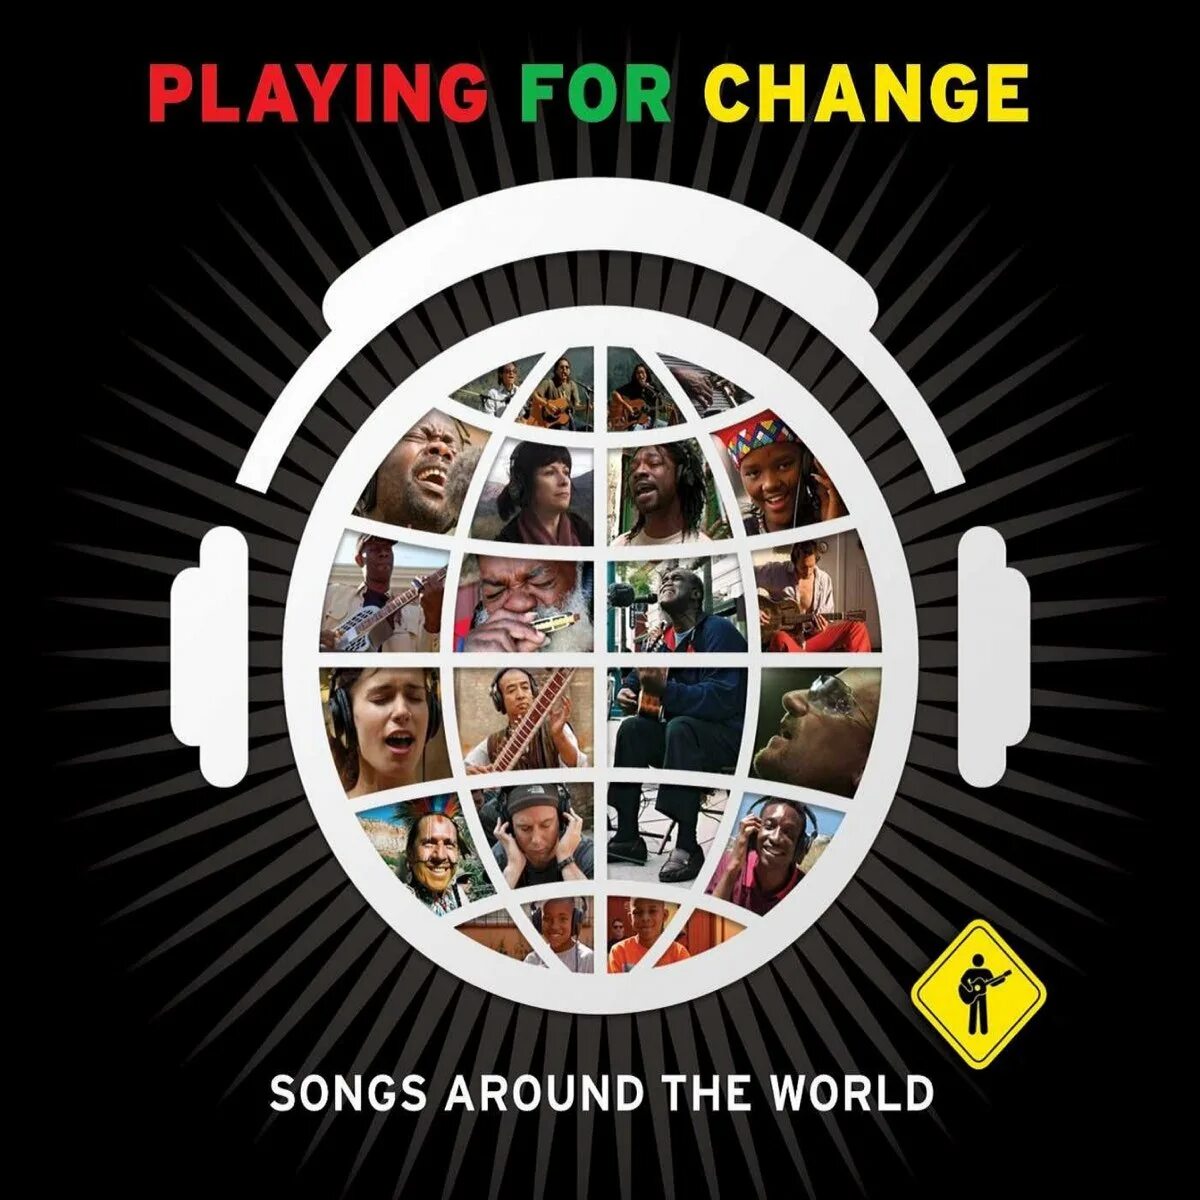 Песня around me. Playing for change. Playing for change Song around the World. Playing for change Band. Around the World around the World песня.